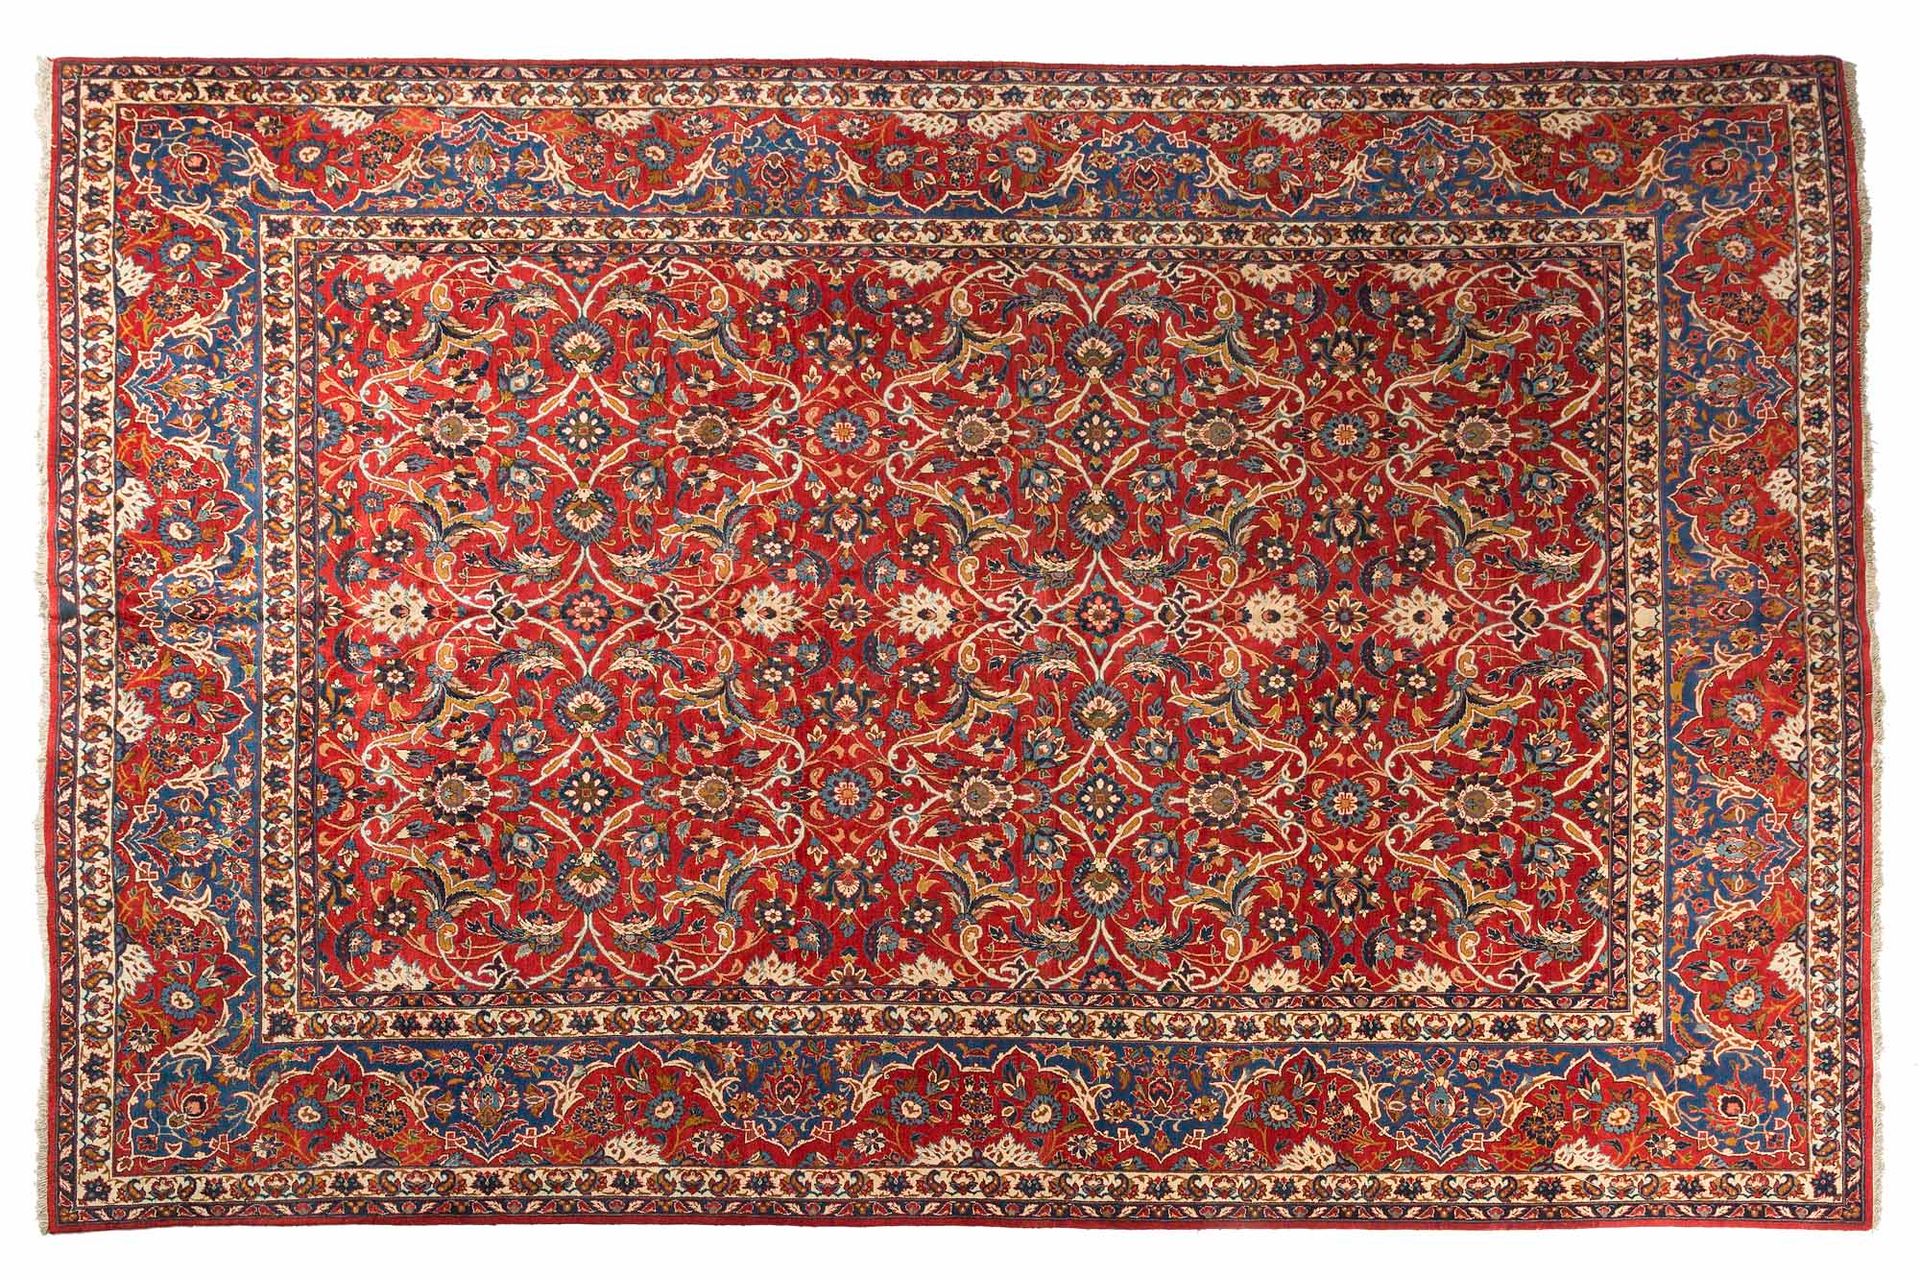 Null Important ISPAHAN carpet (Iran), mid 20th century

Dimensions : 435 x 310cm&hellip;